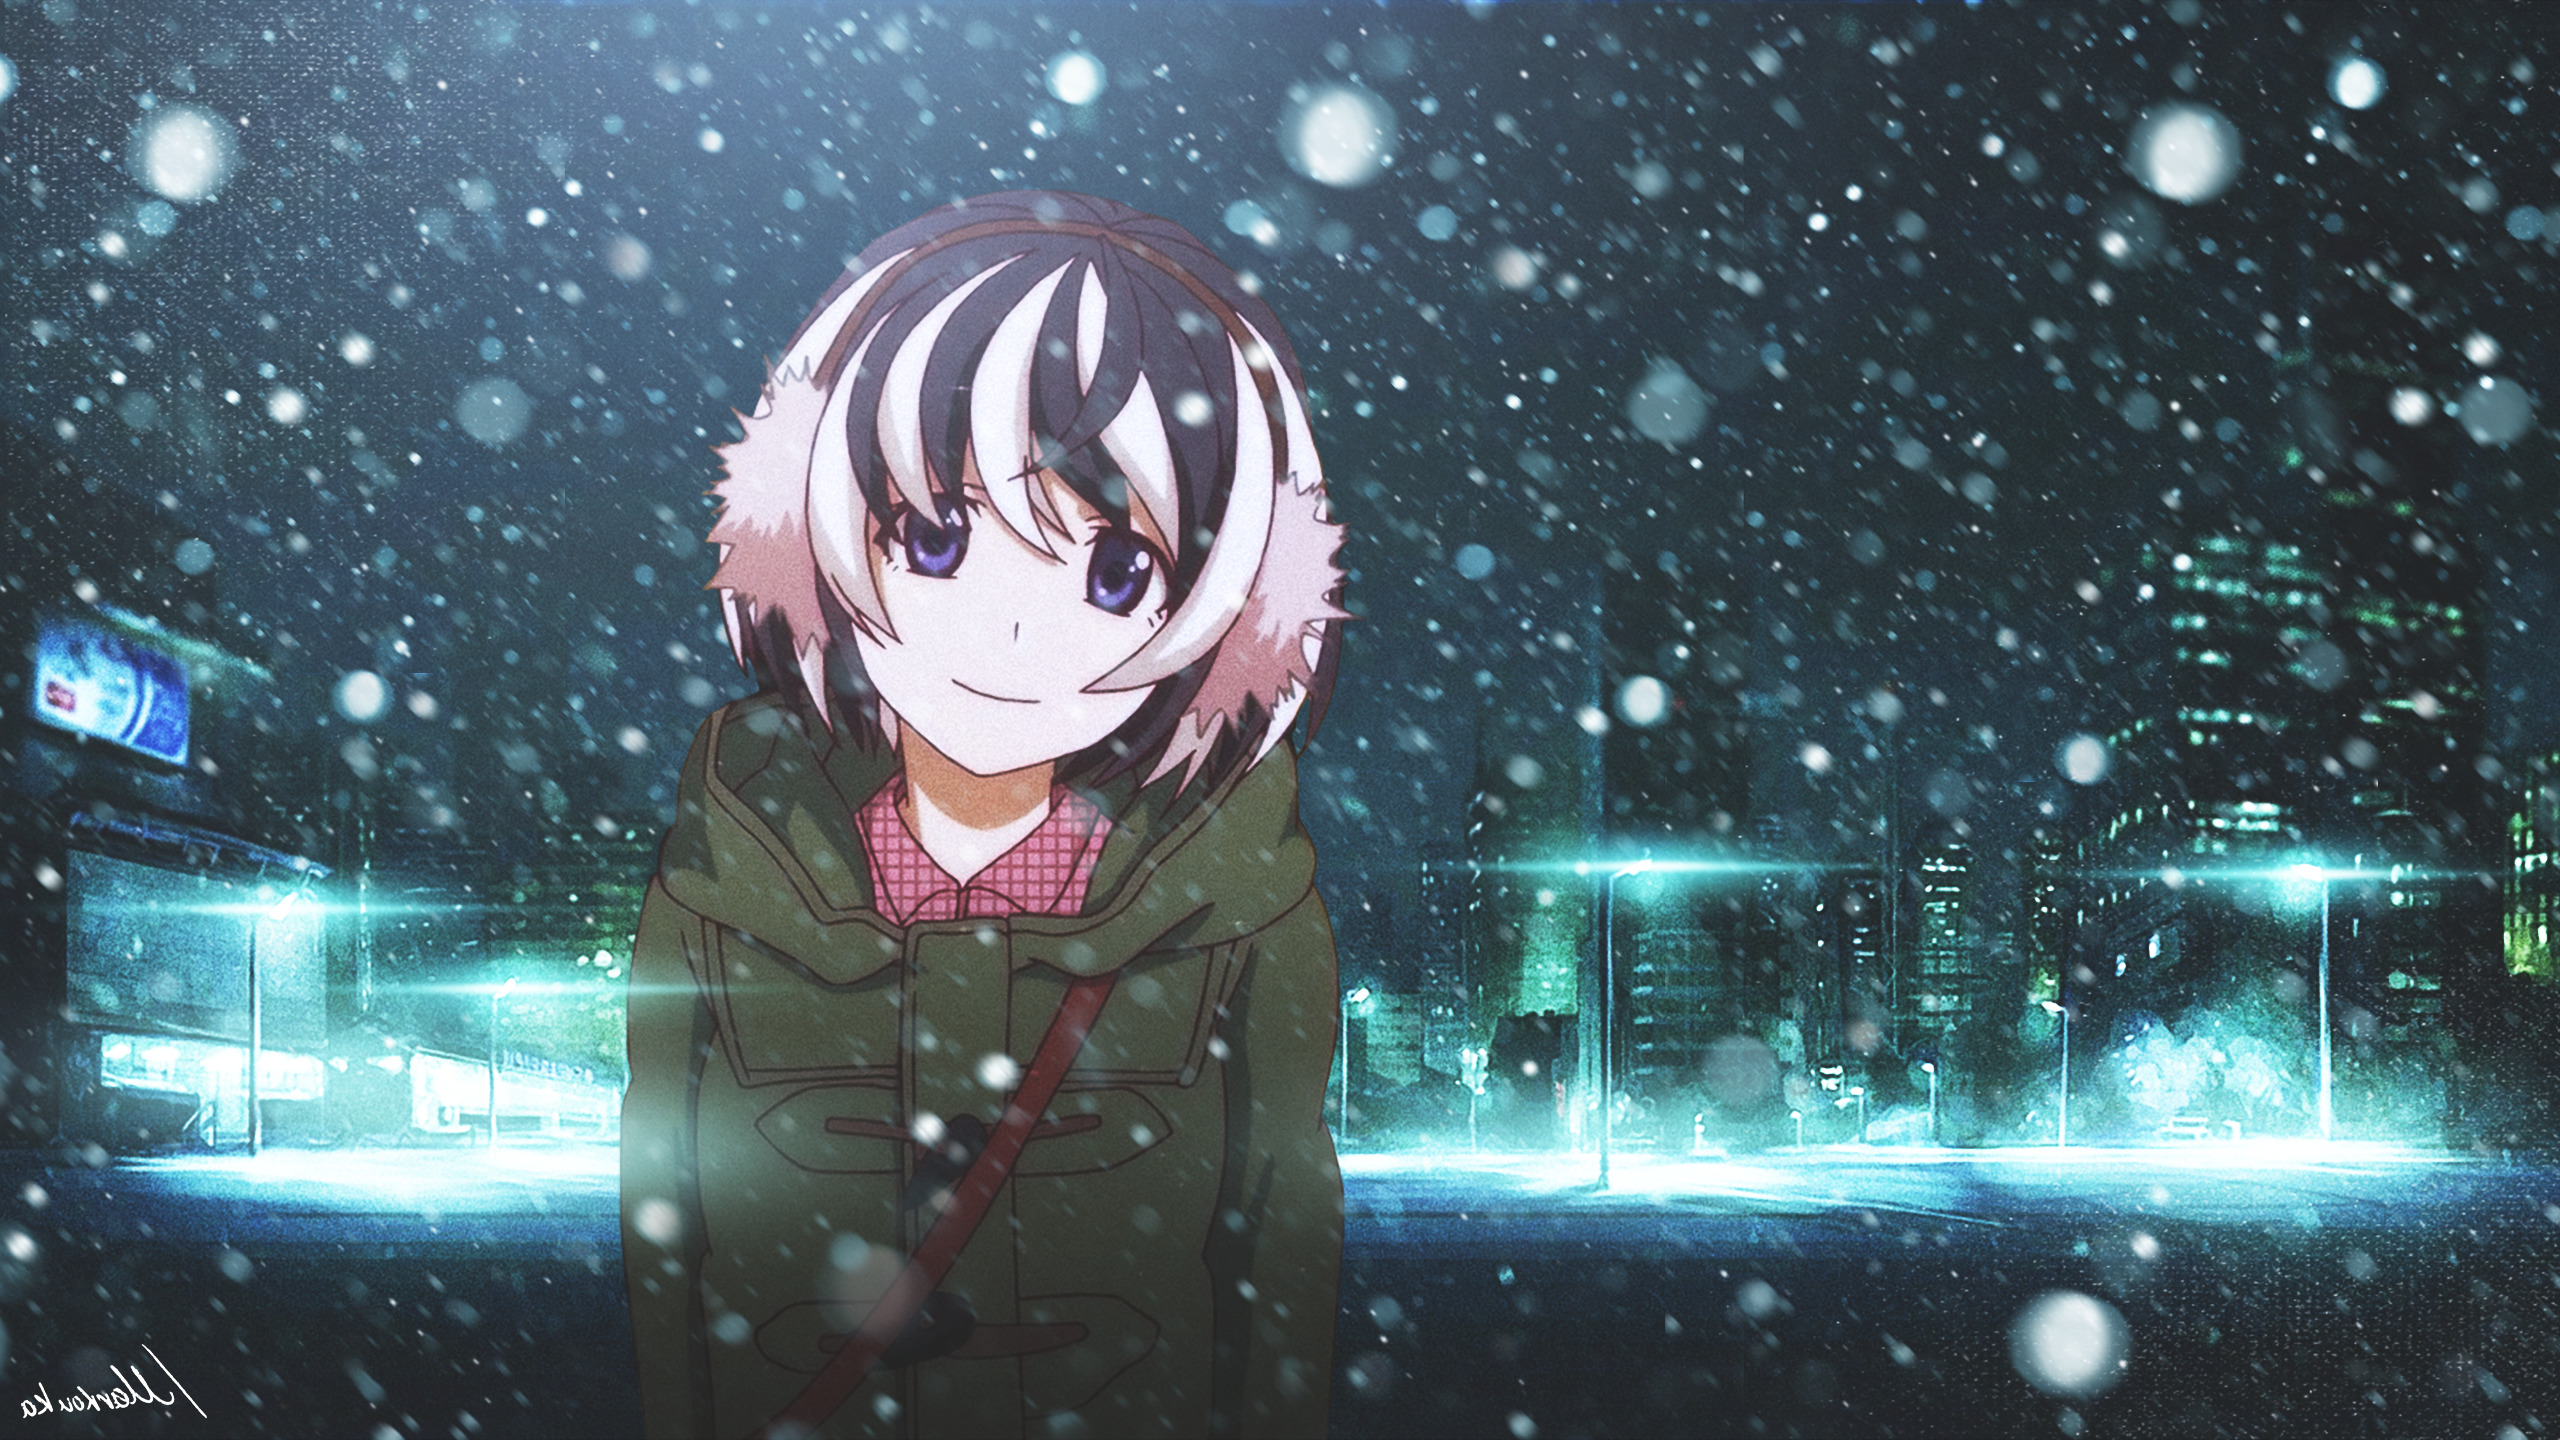 Monogatari Series, Hanekawa Tsubasa, Winter, Night, City, Snow